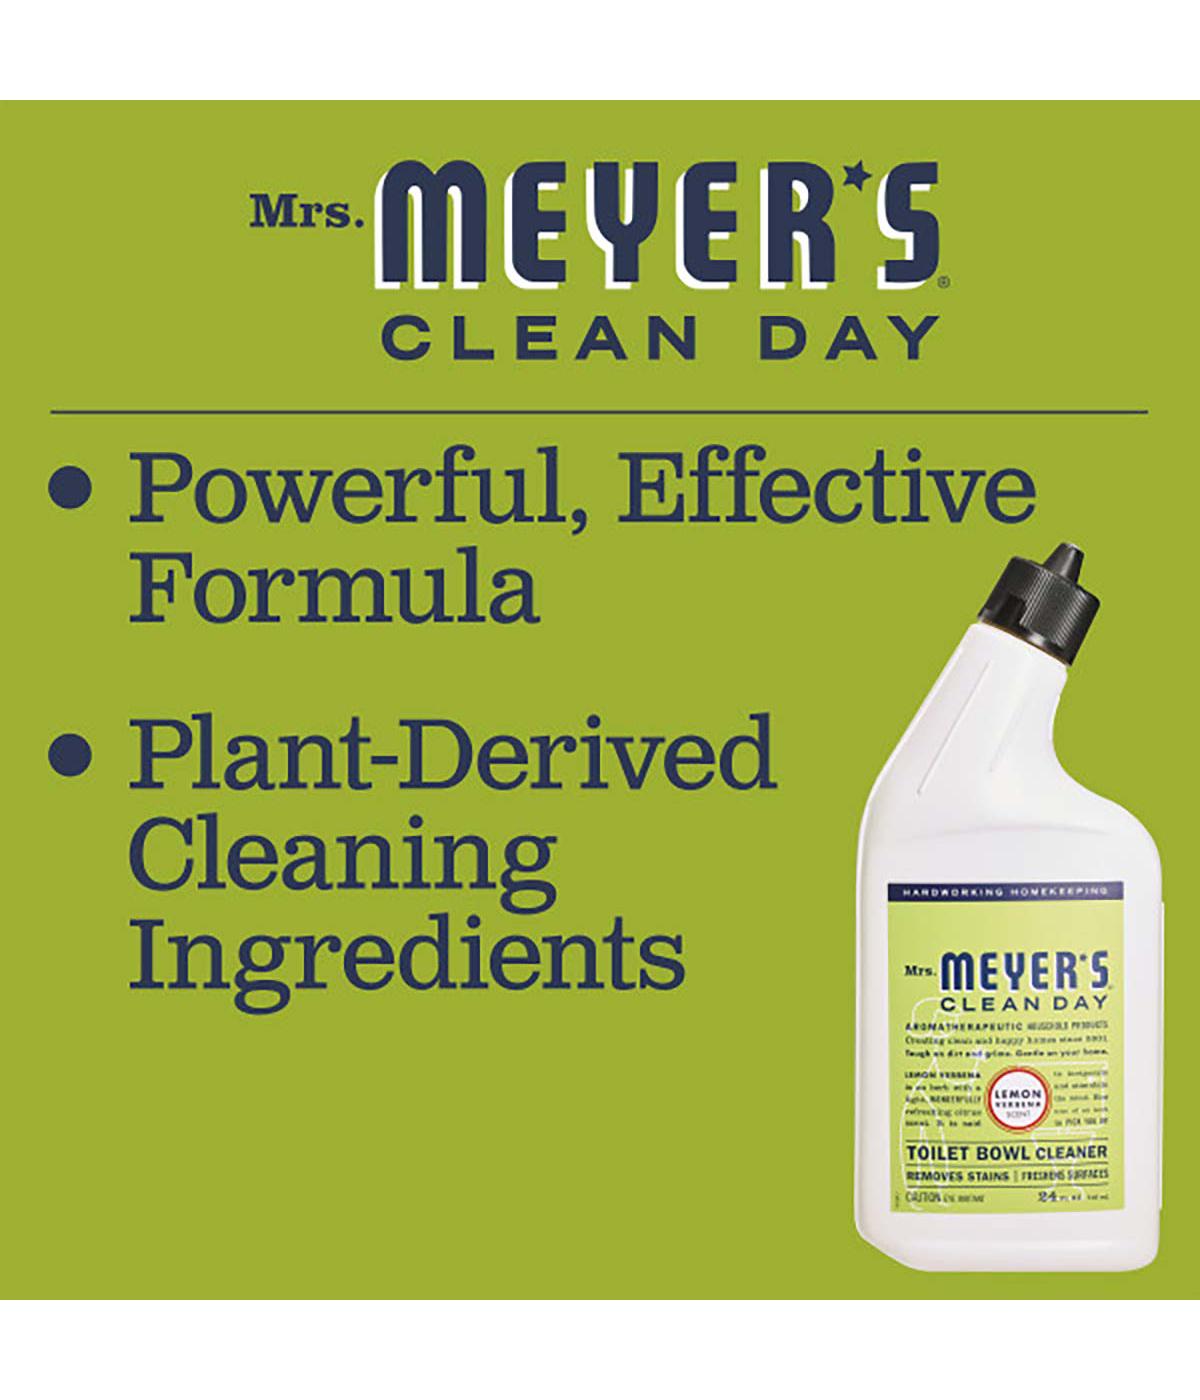 Mrs. Meyer's Clean Day Lemon Verbena Toilet Bowl Cleaner; image 5 of 6